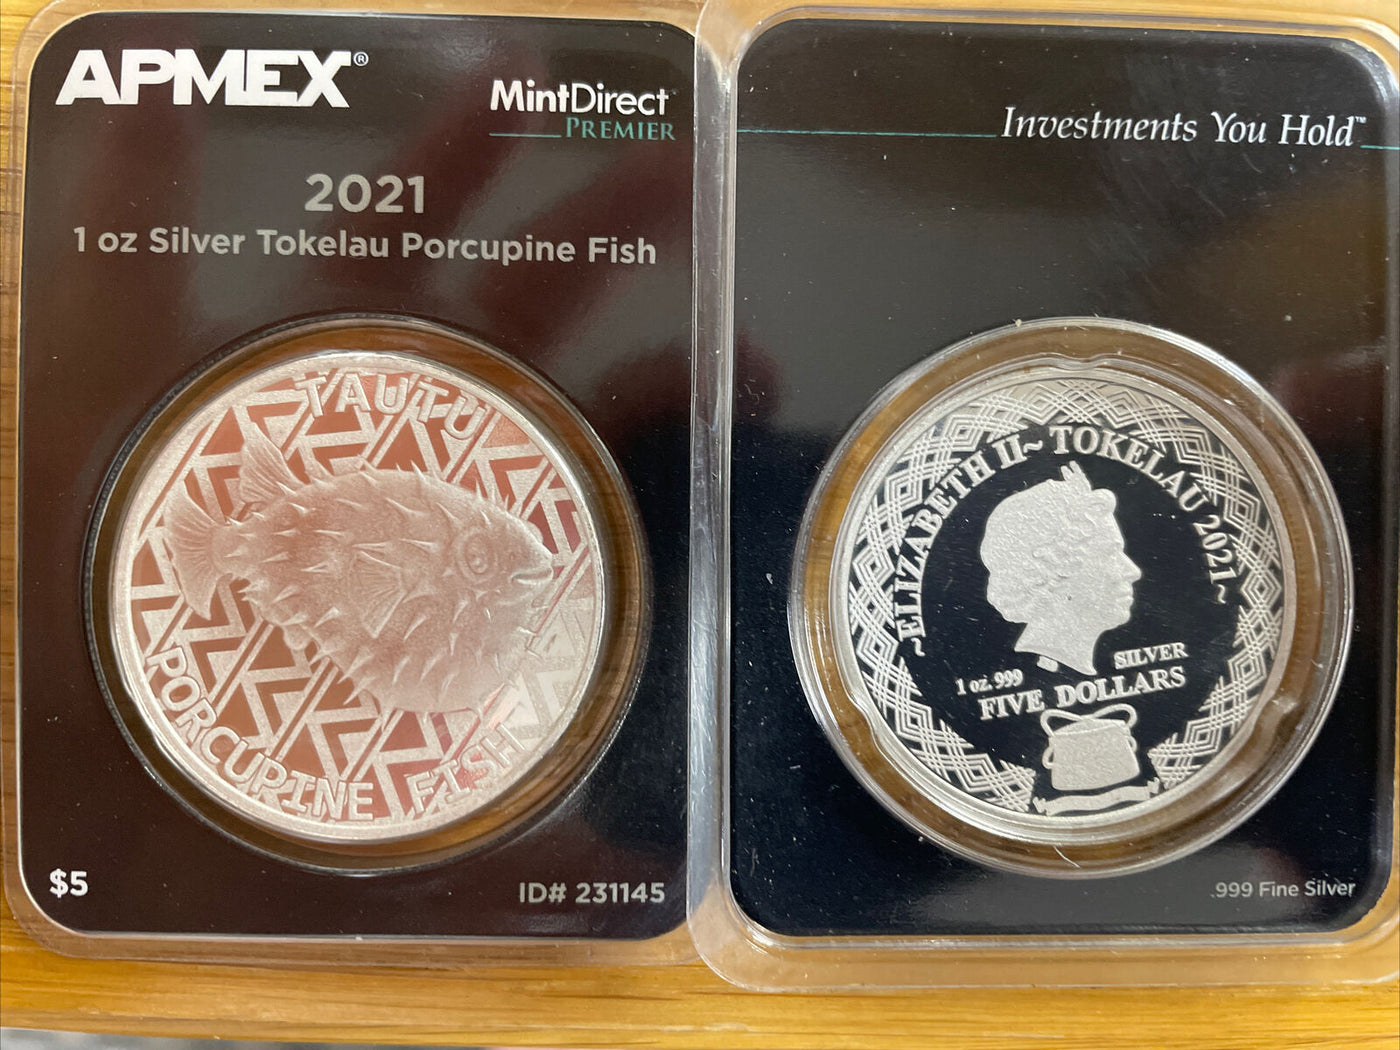 2021 Tokelau Porcupine Fish (Tautu) $5 1 oz Silver Coin Mint Direct Apmex Pkg